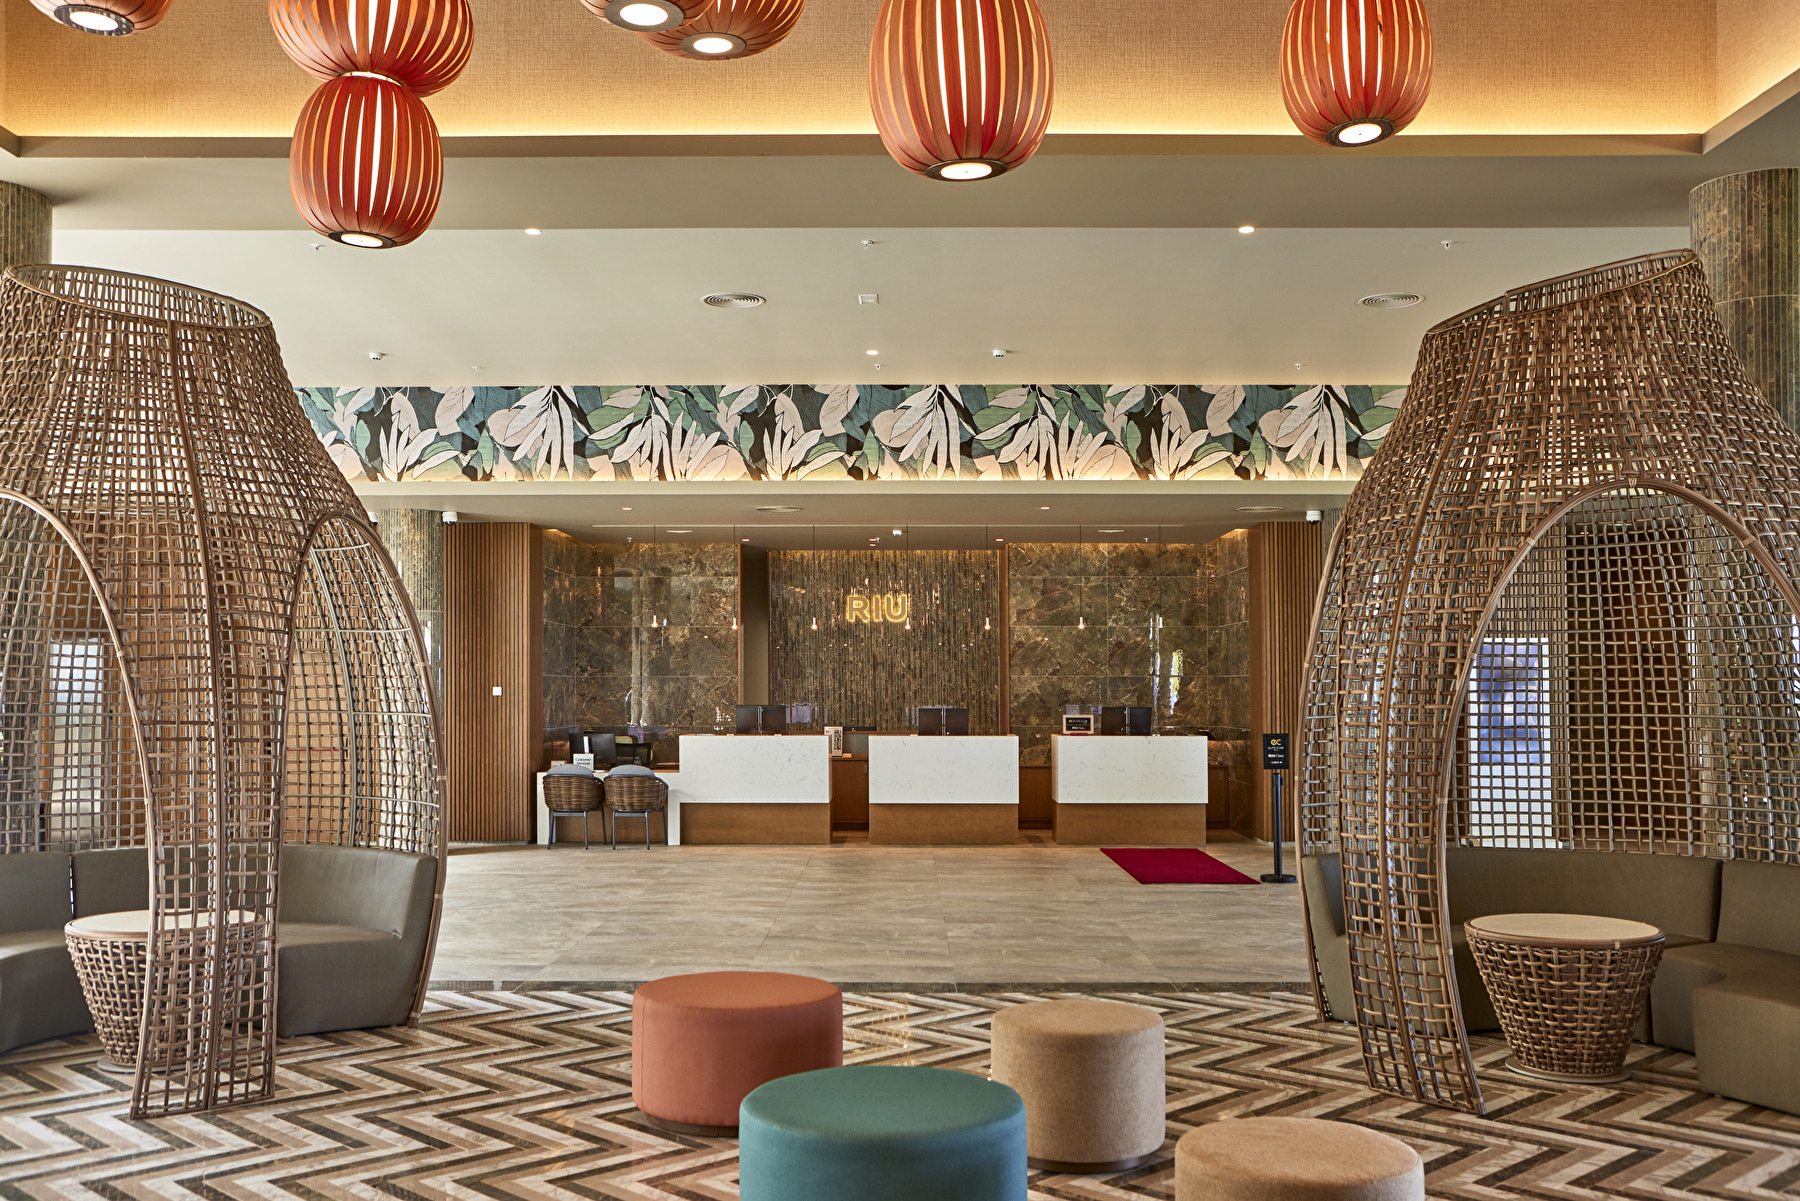 Rezeption in der Lobby des Hotels Riu Palace Mauritius